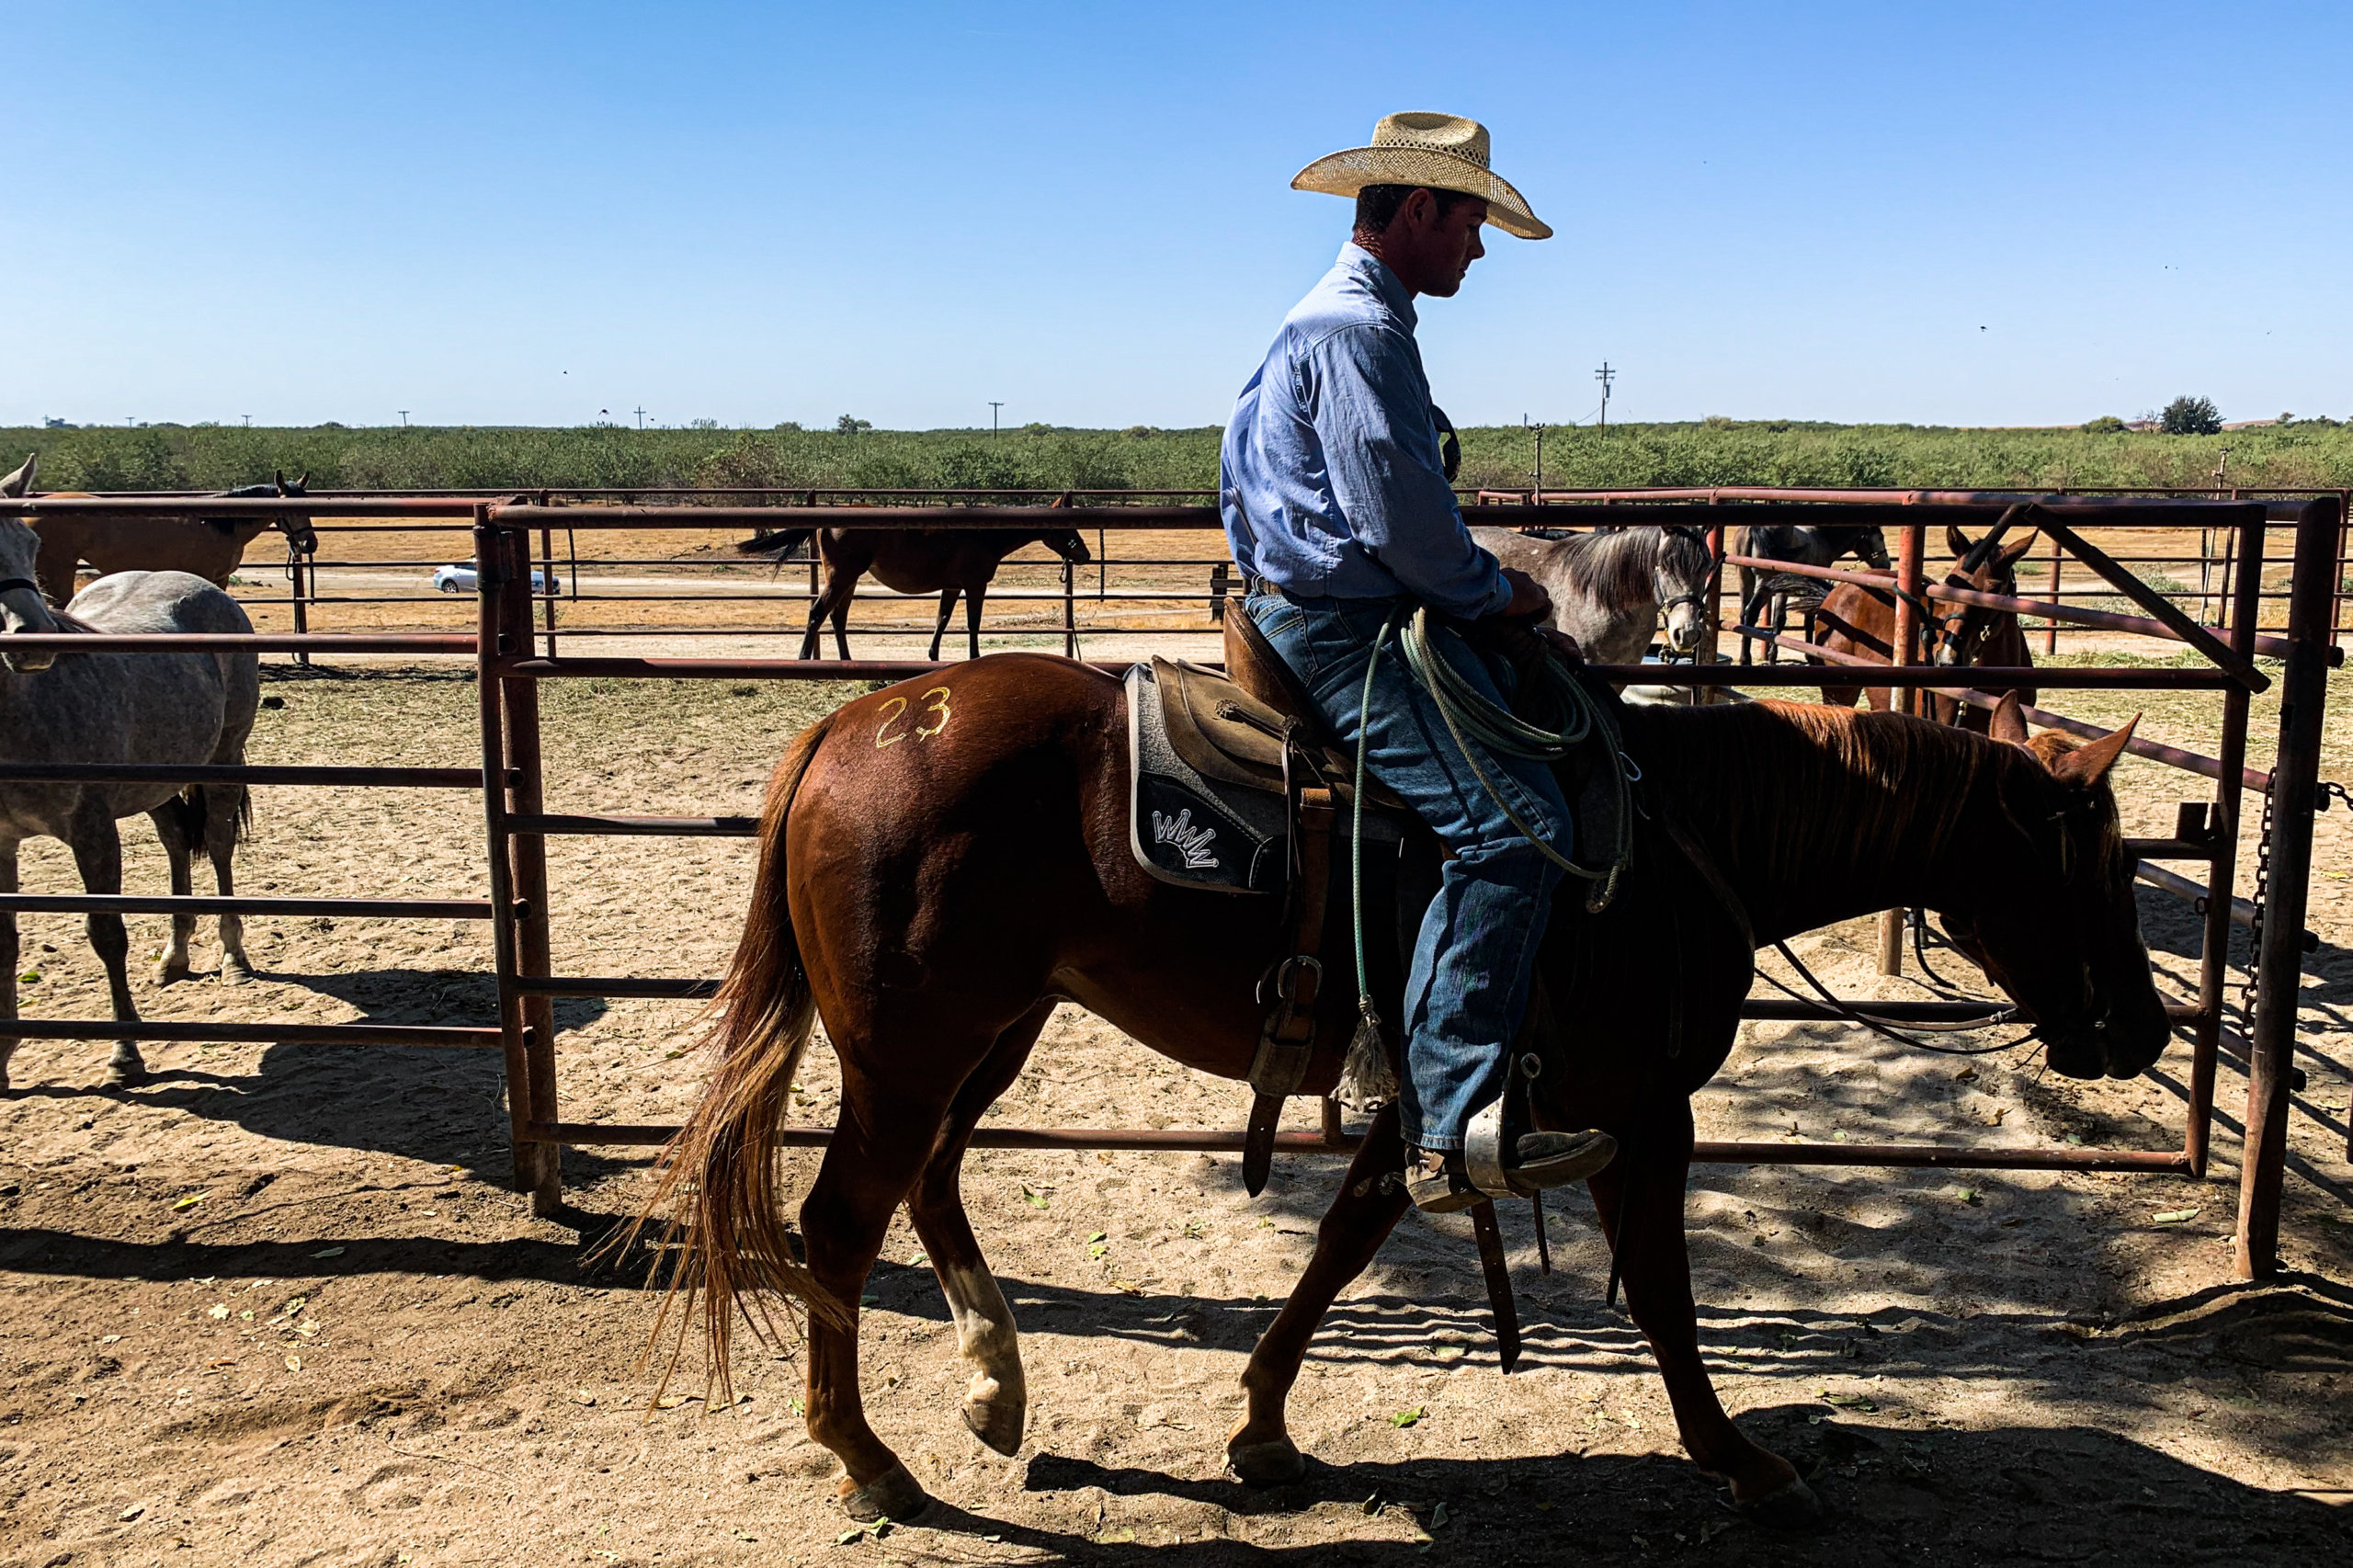 A cowboy rides a horse into the auction arena